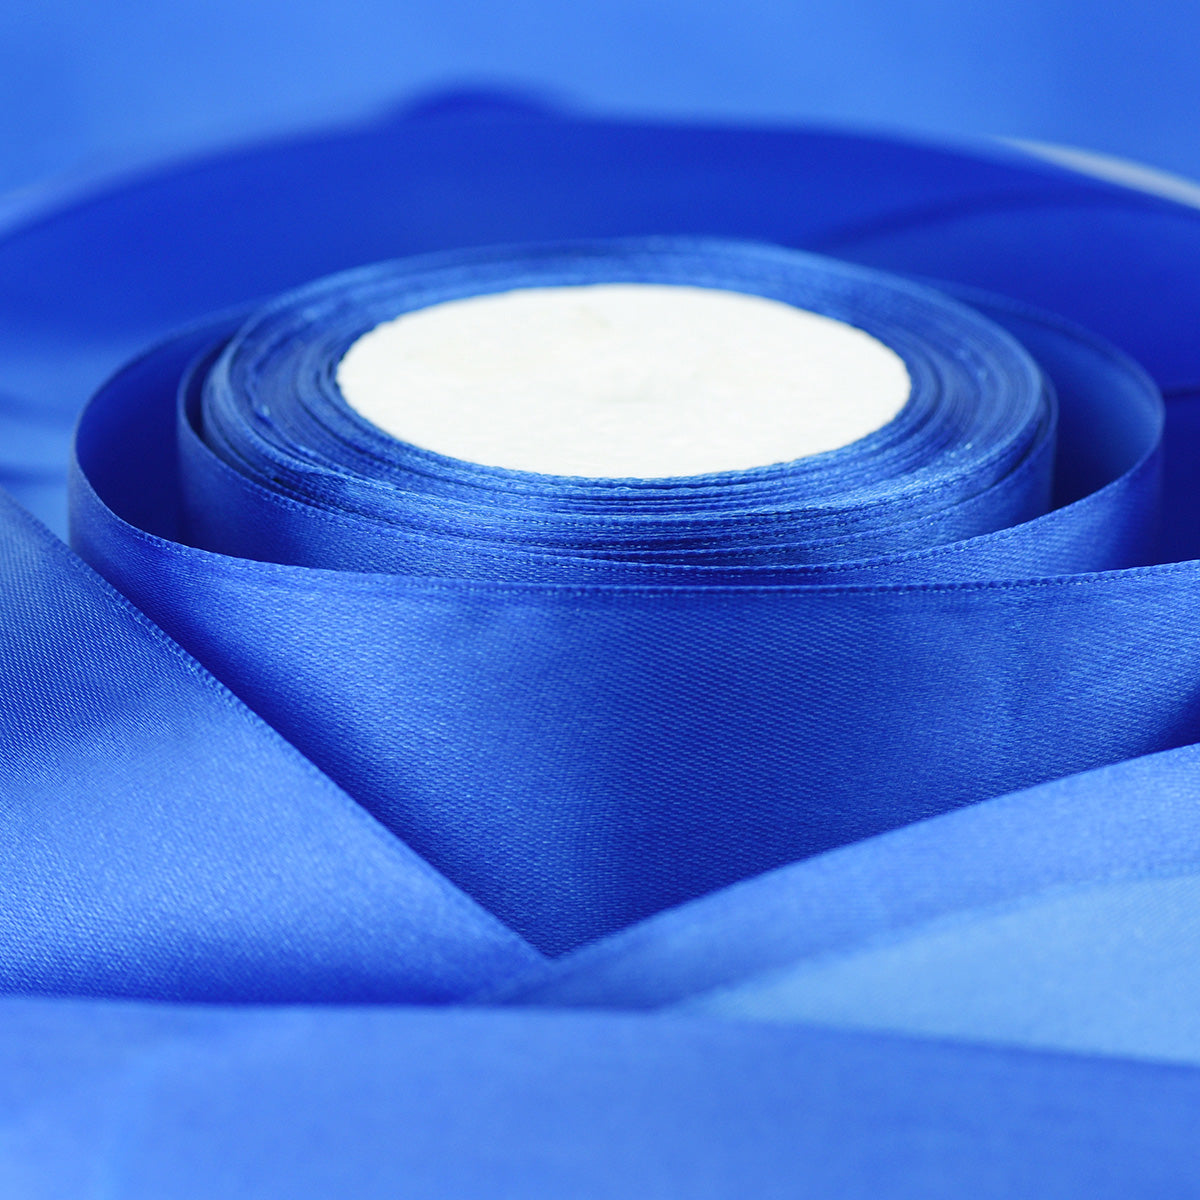 Solid Color Satin Fabric Ribbon (Royal Blue, 12 x 25 Yards)